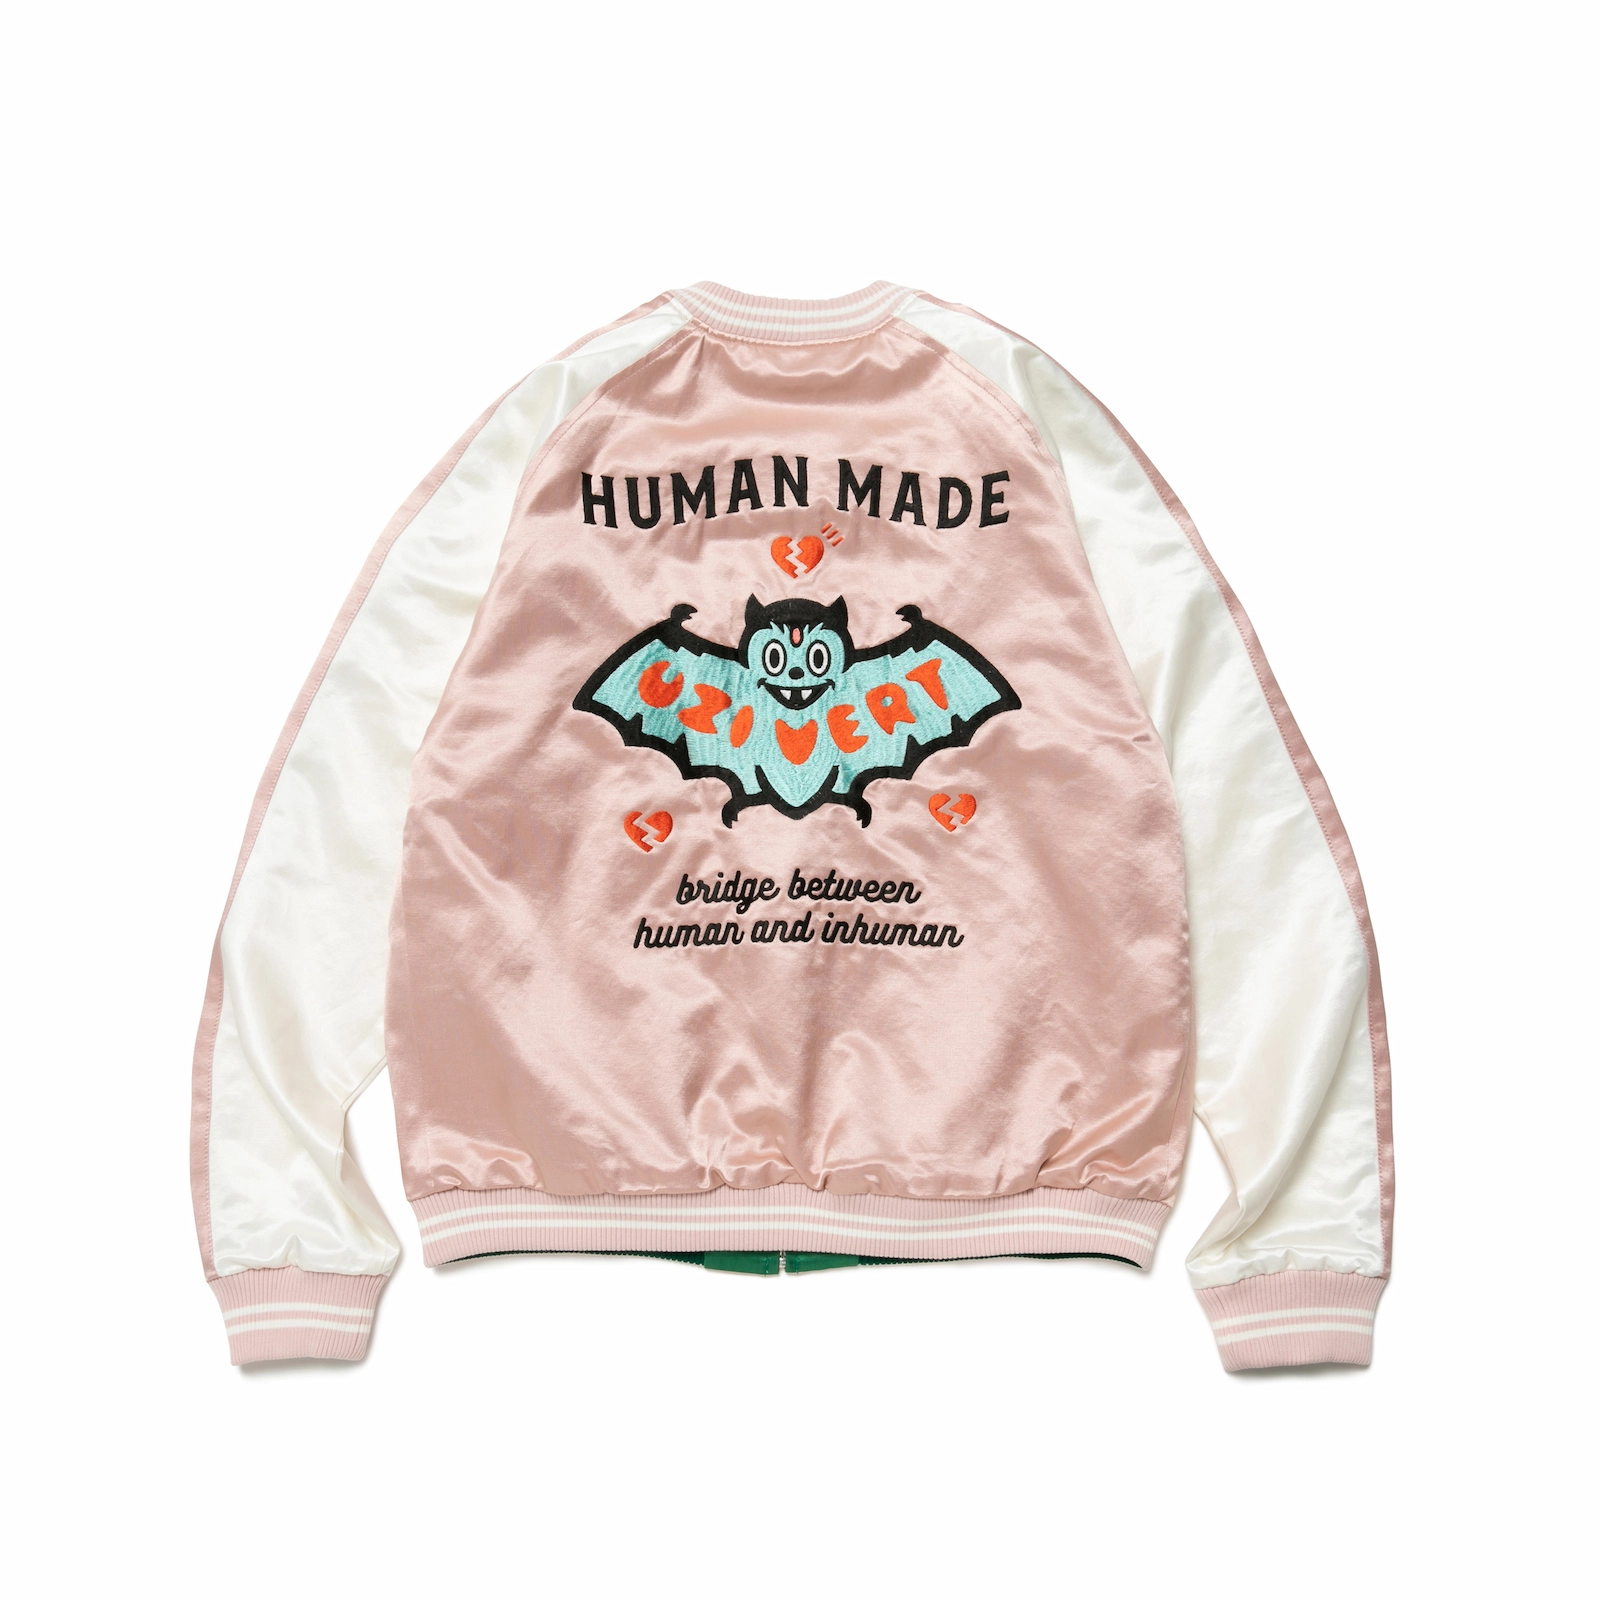 HUMAN MADE x Lil Uzi Vert “UZI MADE” Collection | HUMAN MADE Inc.